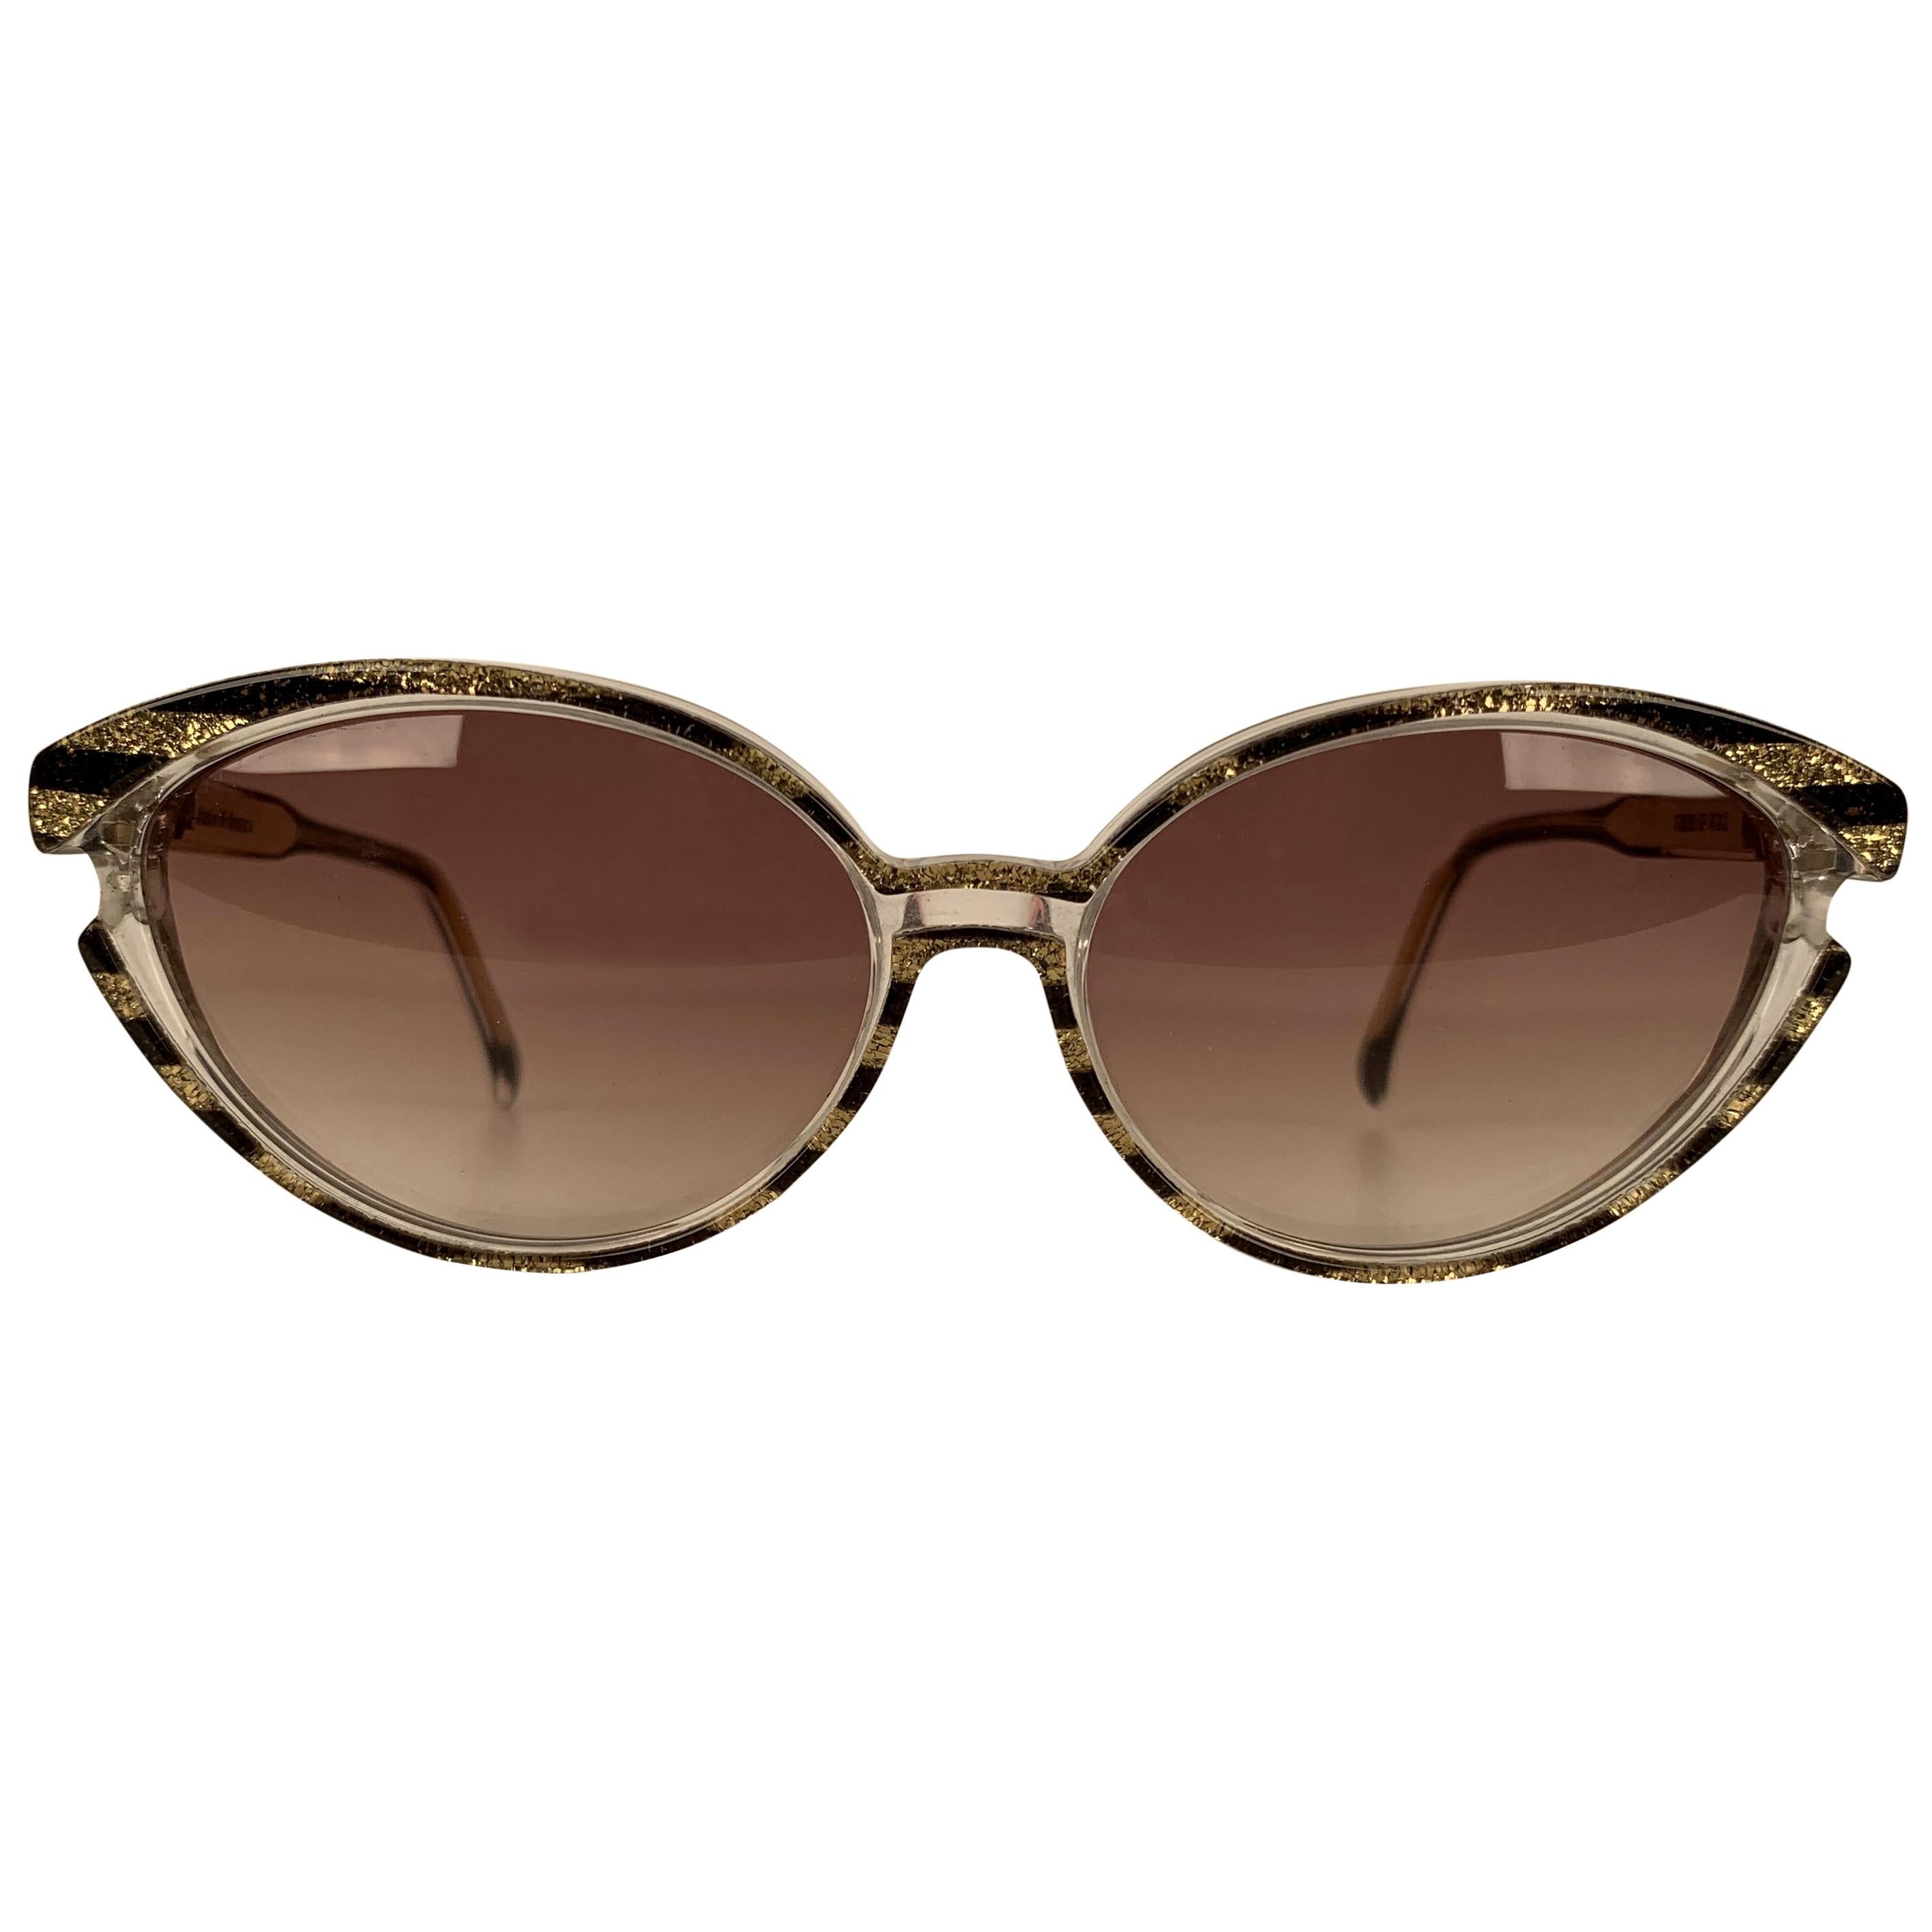 Yves Saint Laurent Vintage Sunglasses 8316 P 42 Striped Gold Glitter